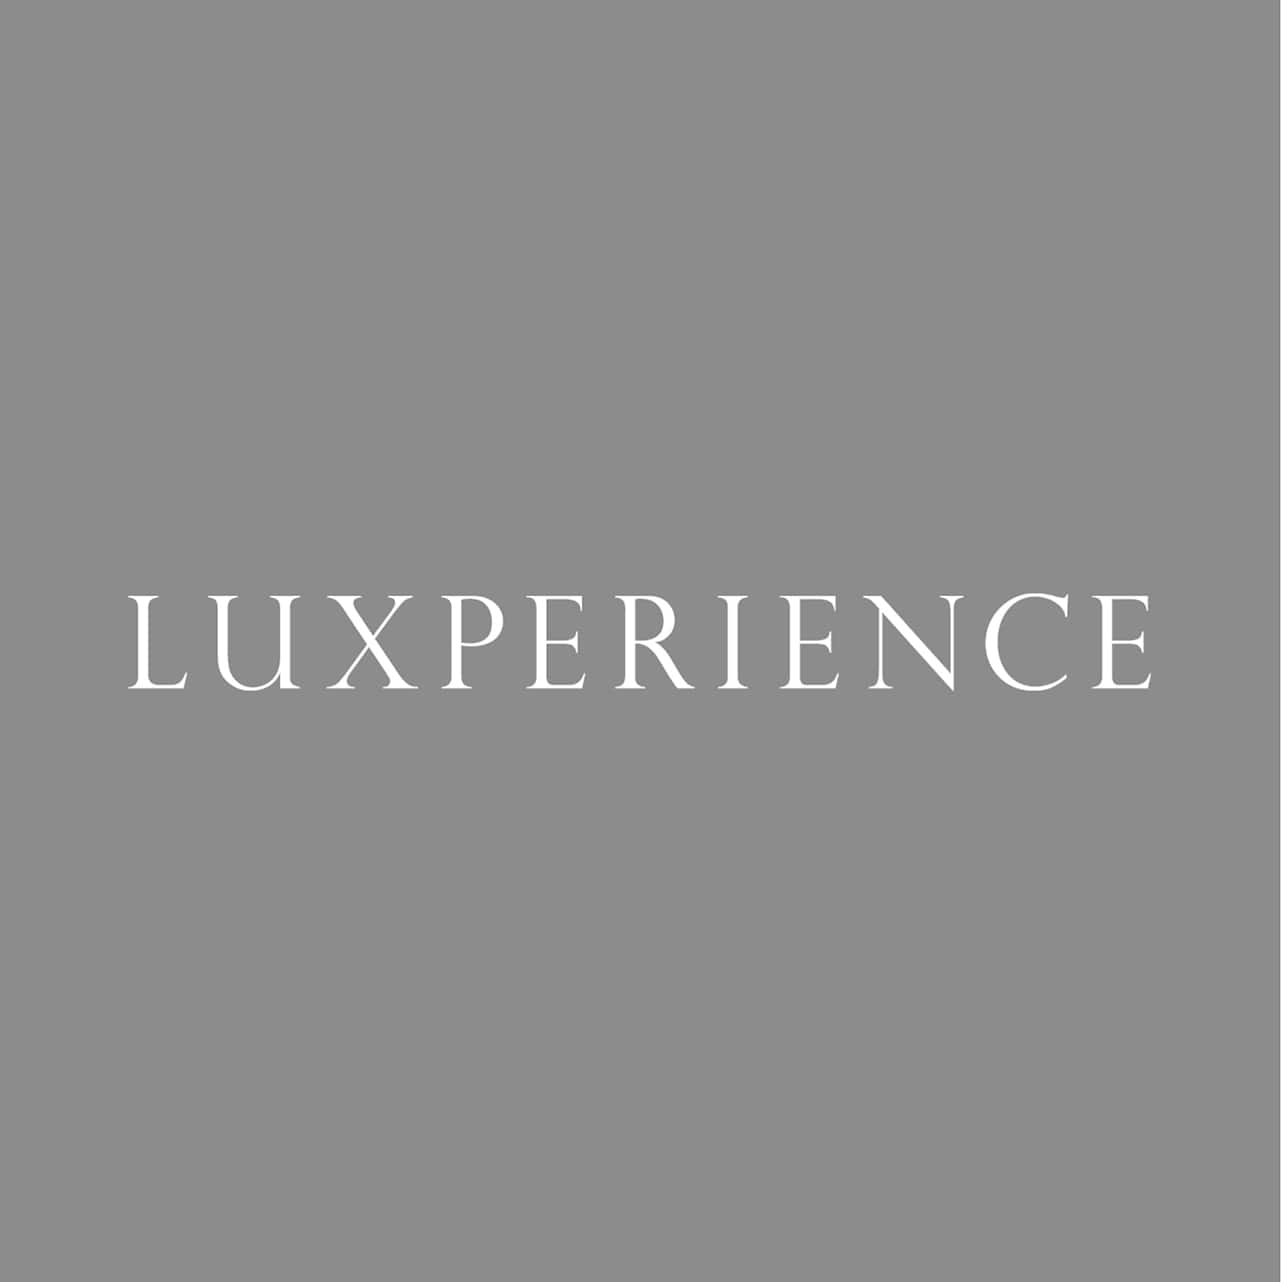 Luxperience